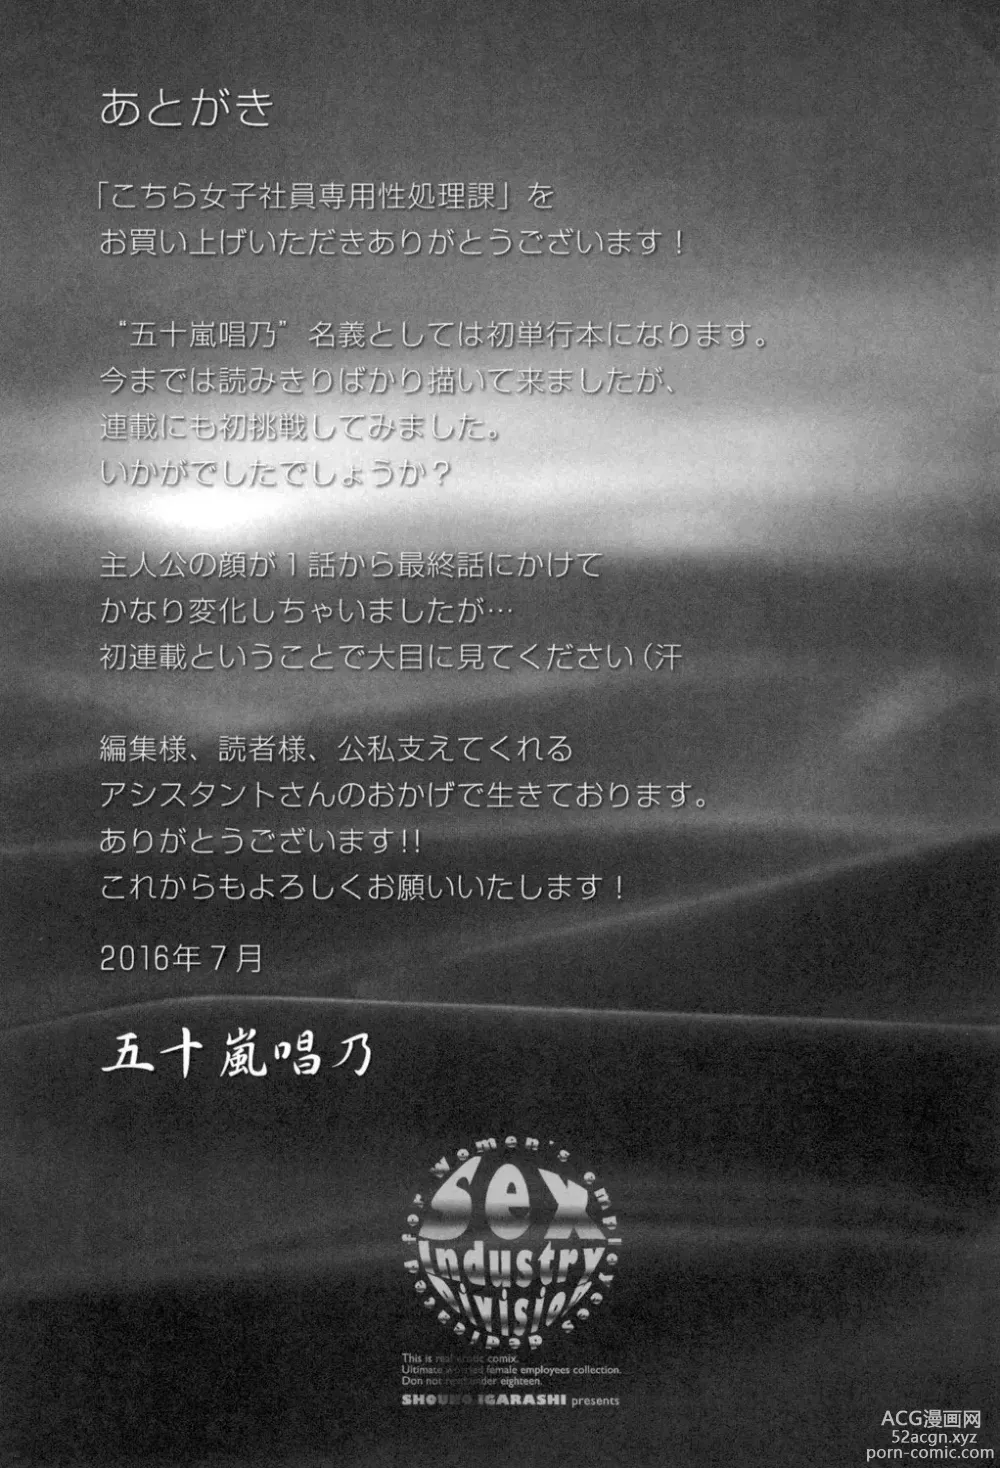 Page 214 of manga Kochira Joshi Shain Senyou Seishorika - Sex Industry Division for Womens Employees Dedicated